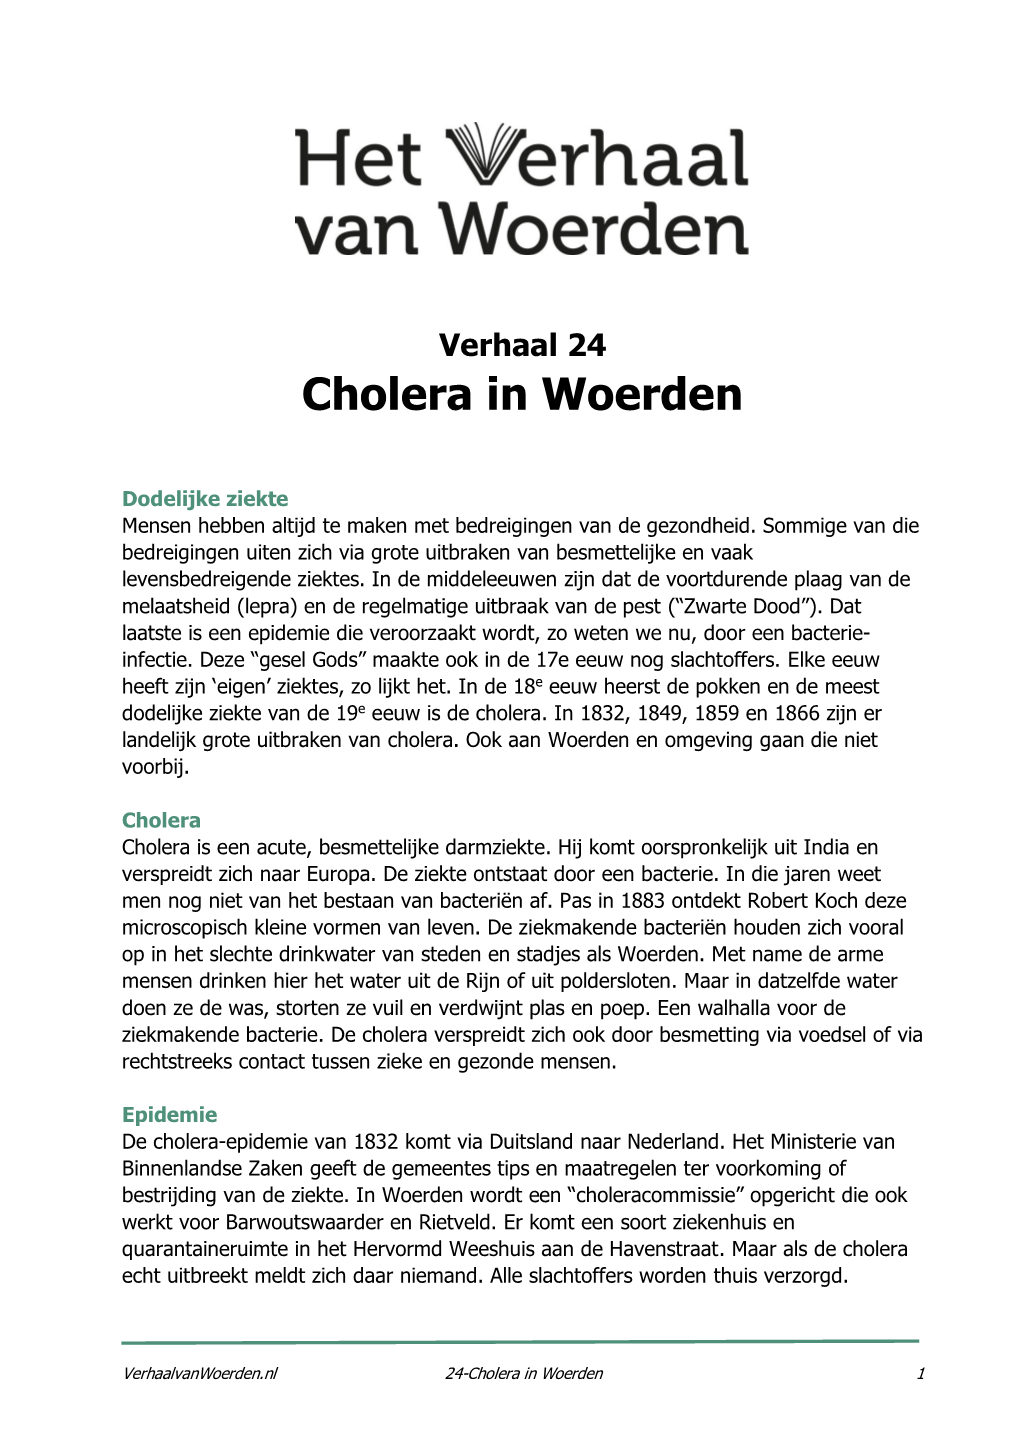 Cholera in Woerden